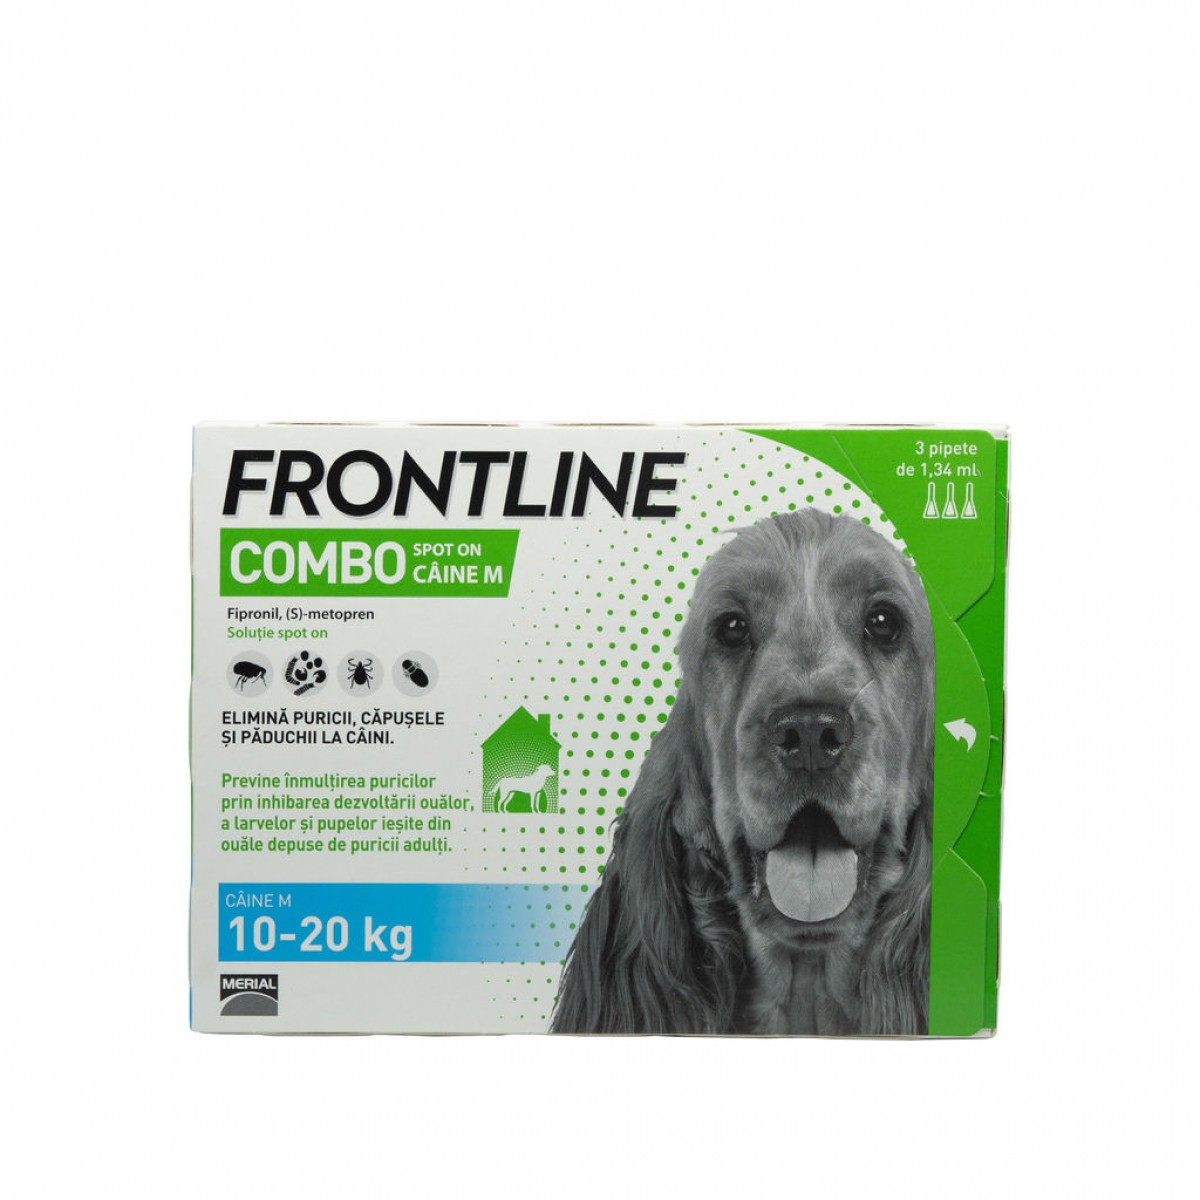 Frontline Combo pentru caini de talie medie 10-20kg, 3 pipete antiparazitare, Antiparazitare externe, Antiparazitare, Câini 